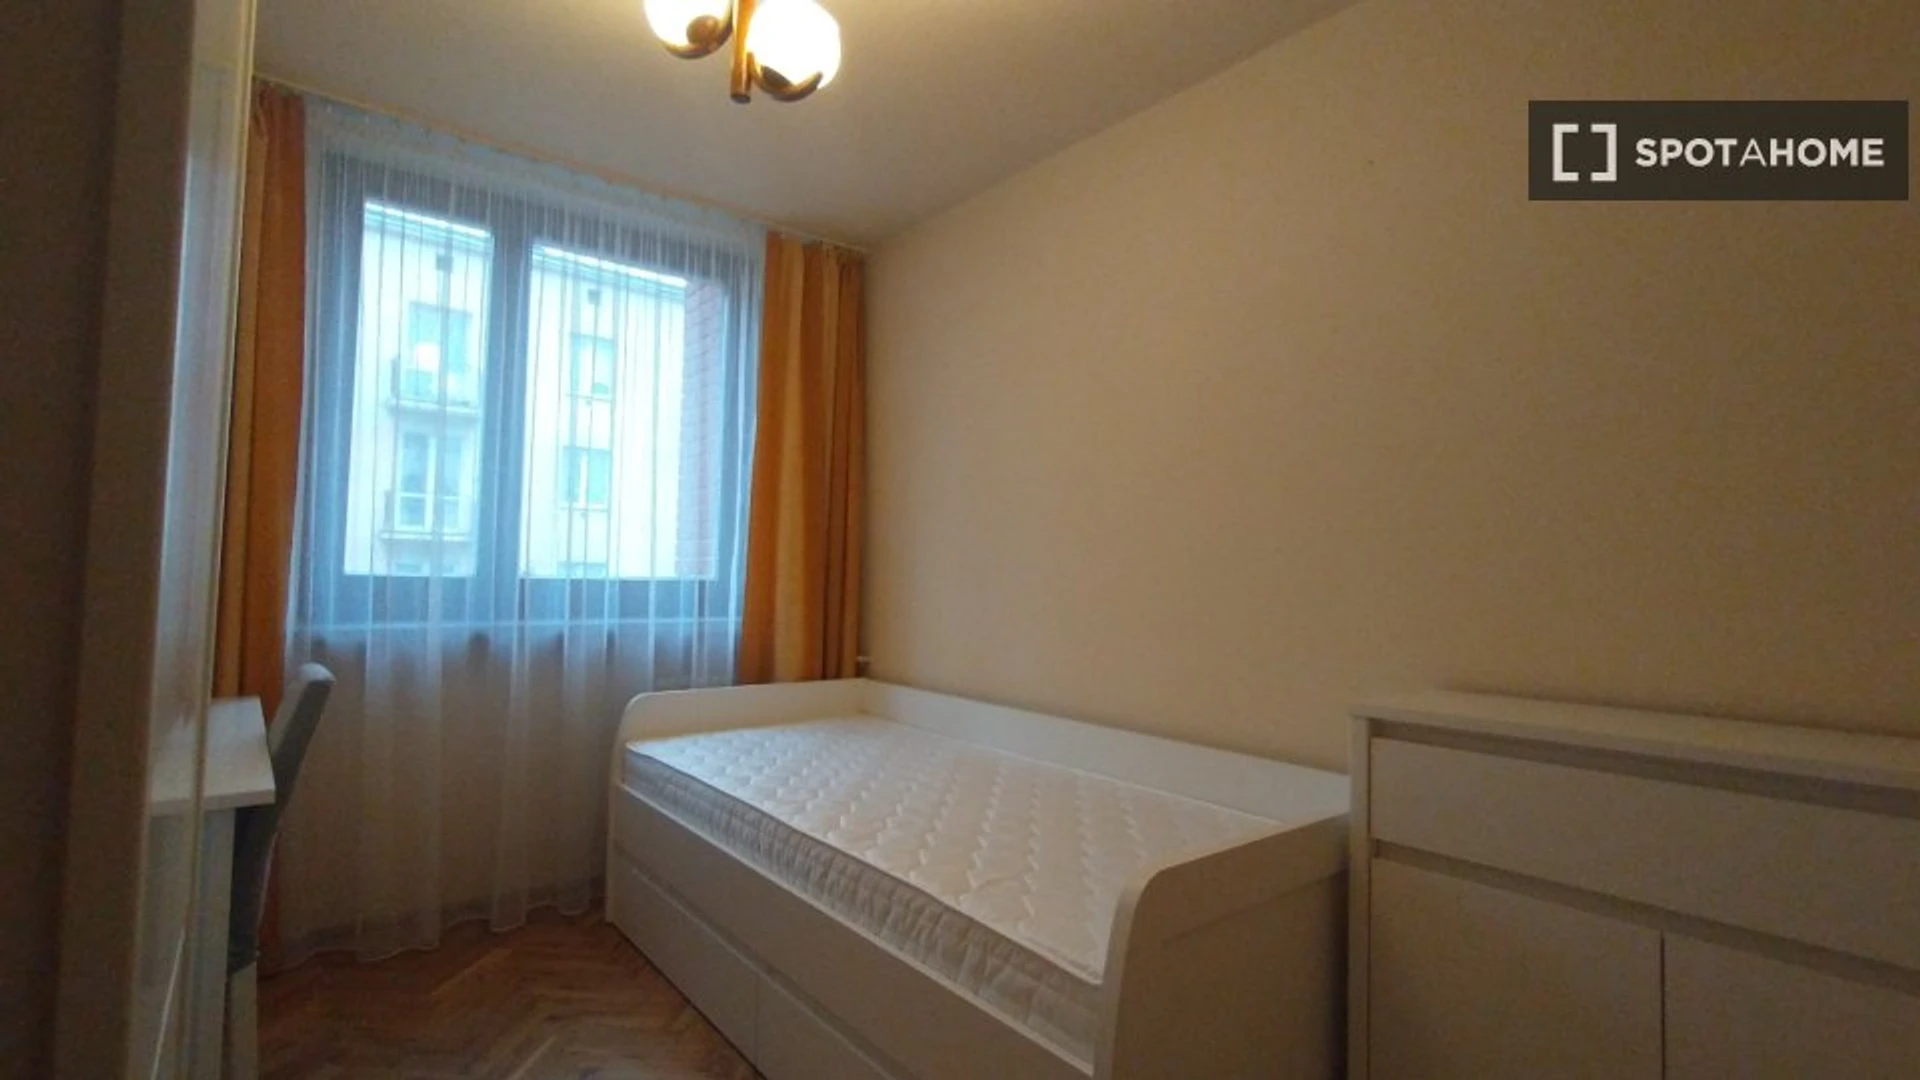 Location mensuelle de chambres à Lublin